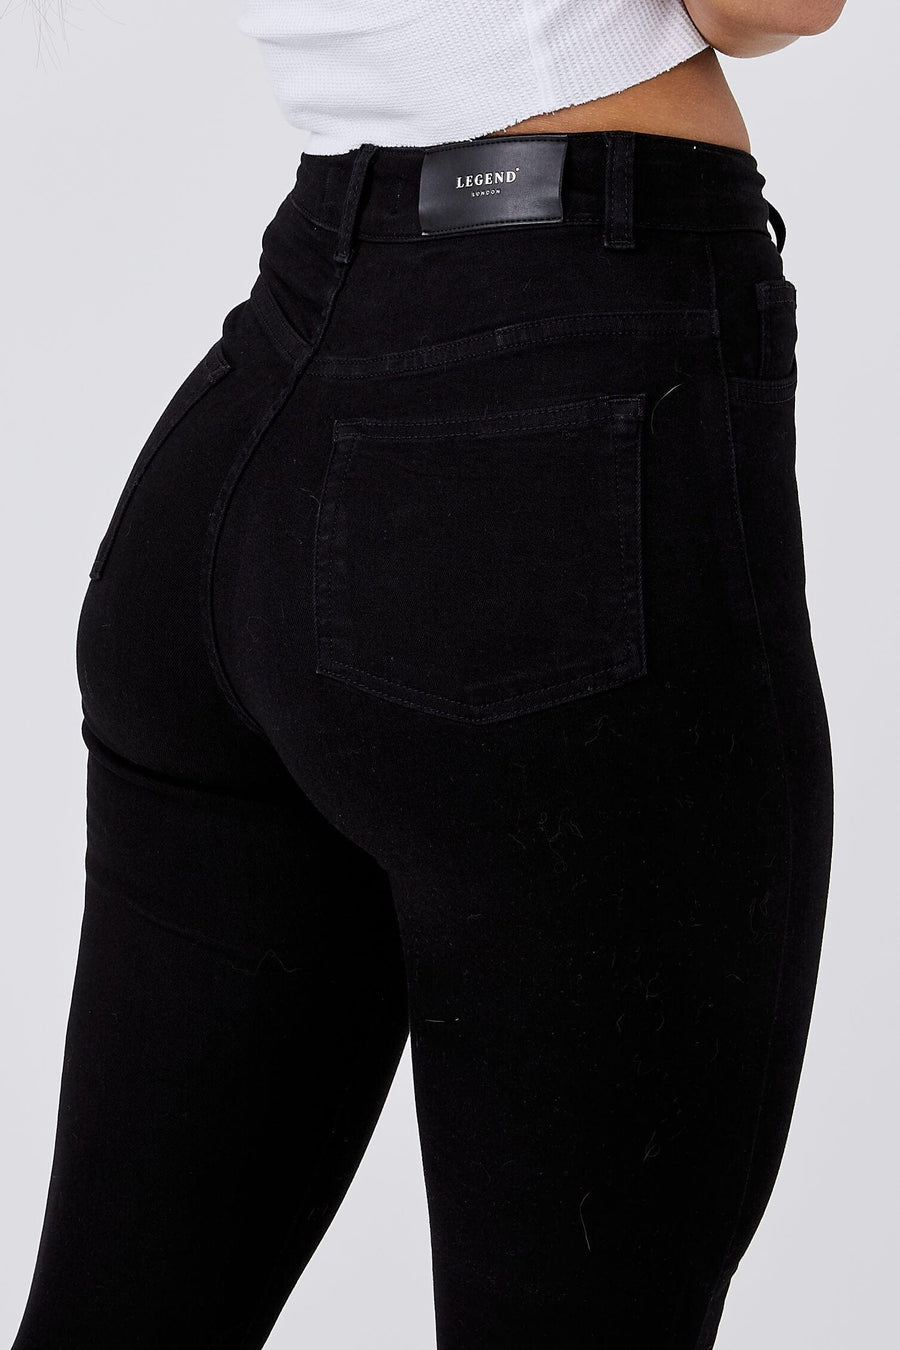 Legend London Jeans SKINNY JEANS - BLACK